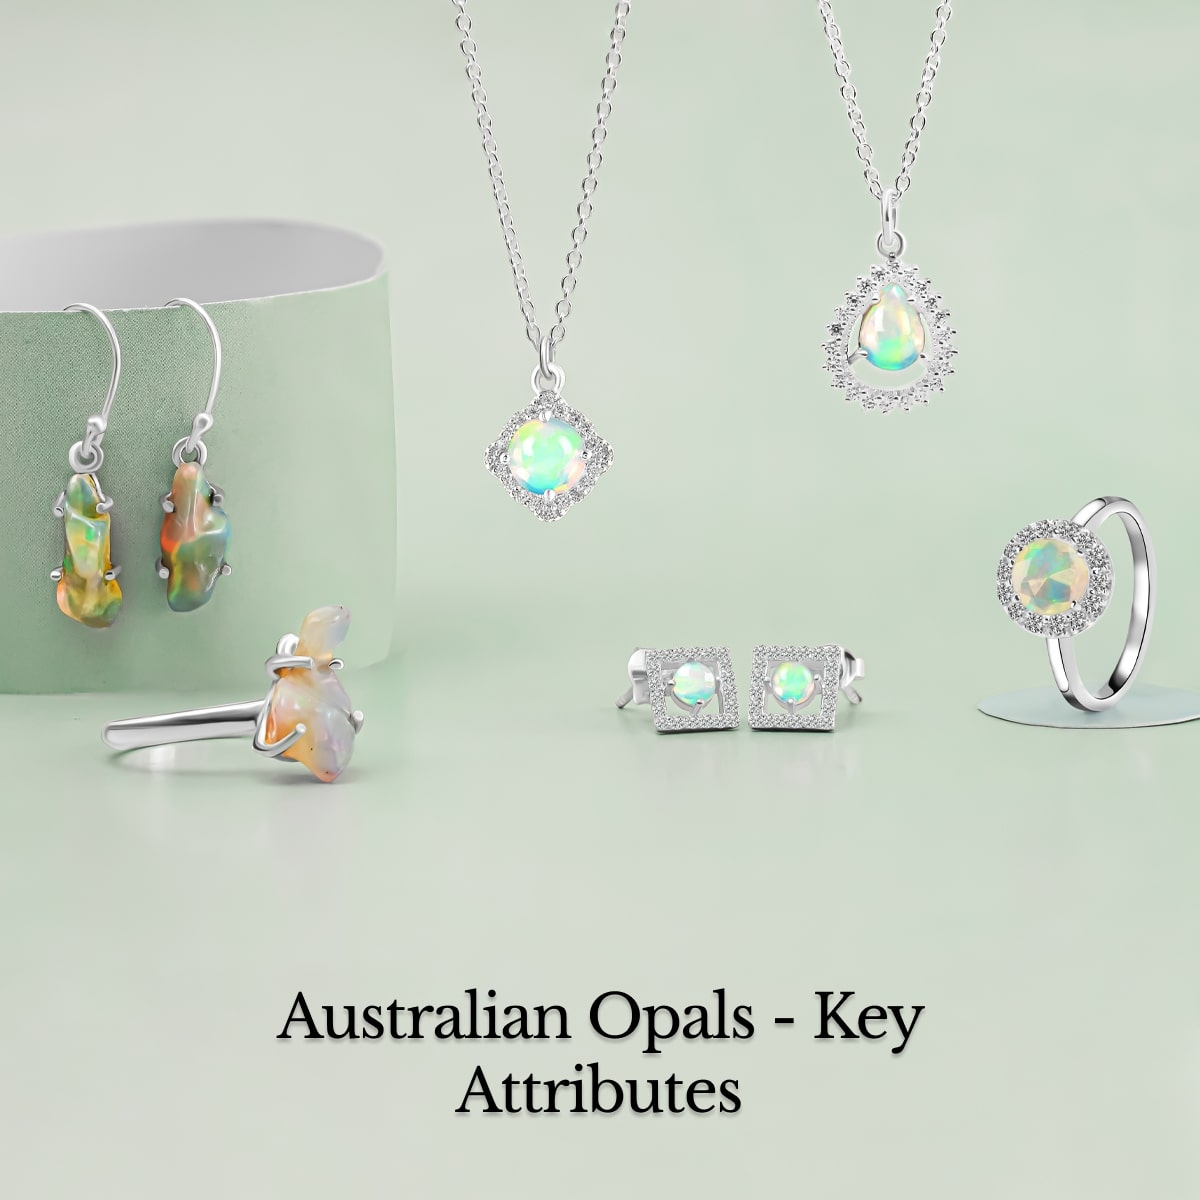 Australian Opal Features